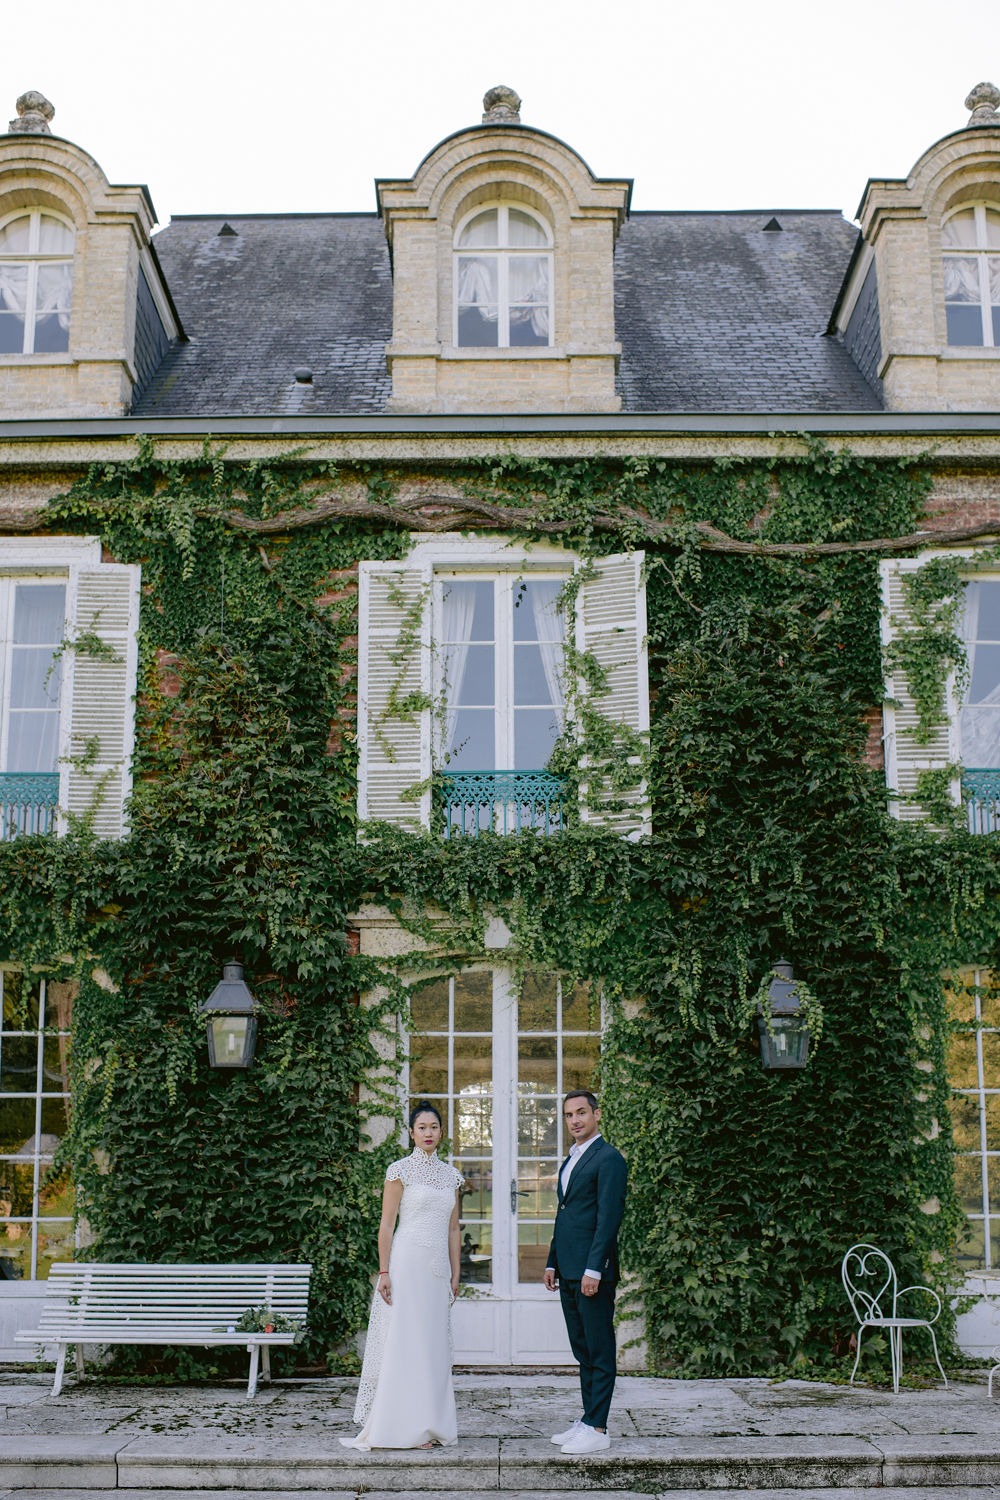 Anna and Arthur | An Intimate Ceremony at Orangerie Saint-Jean, France